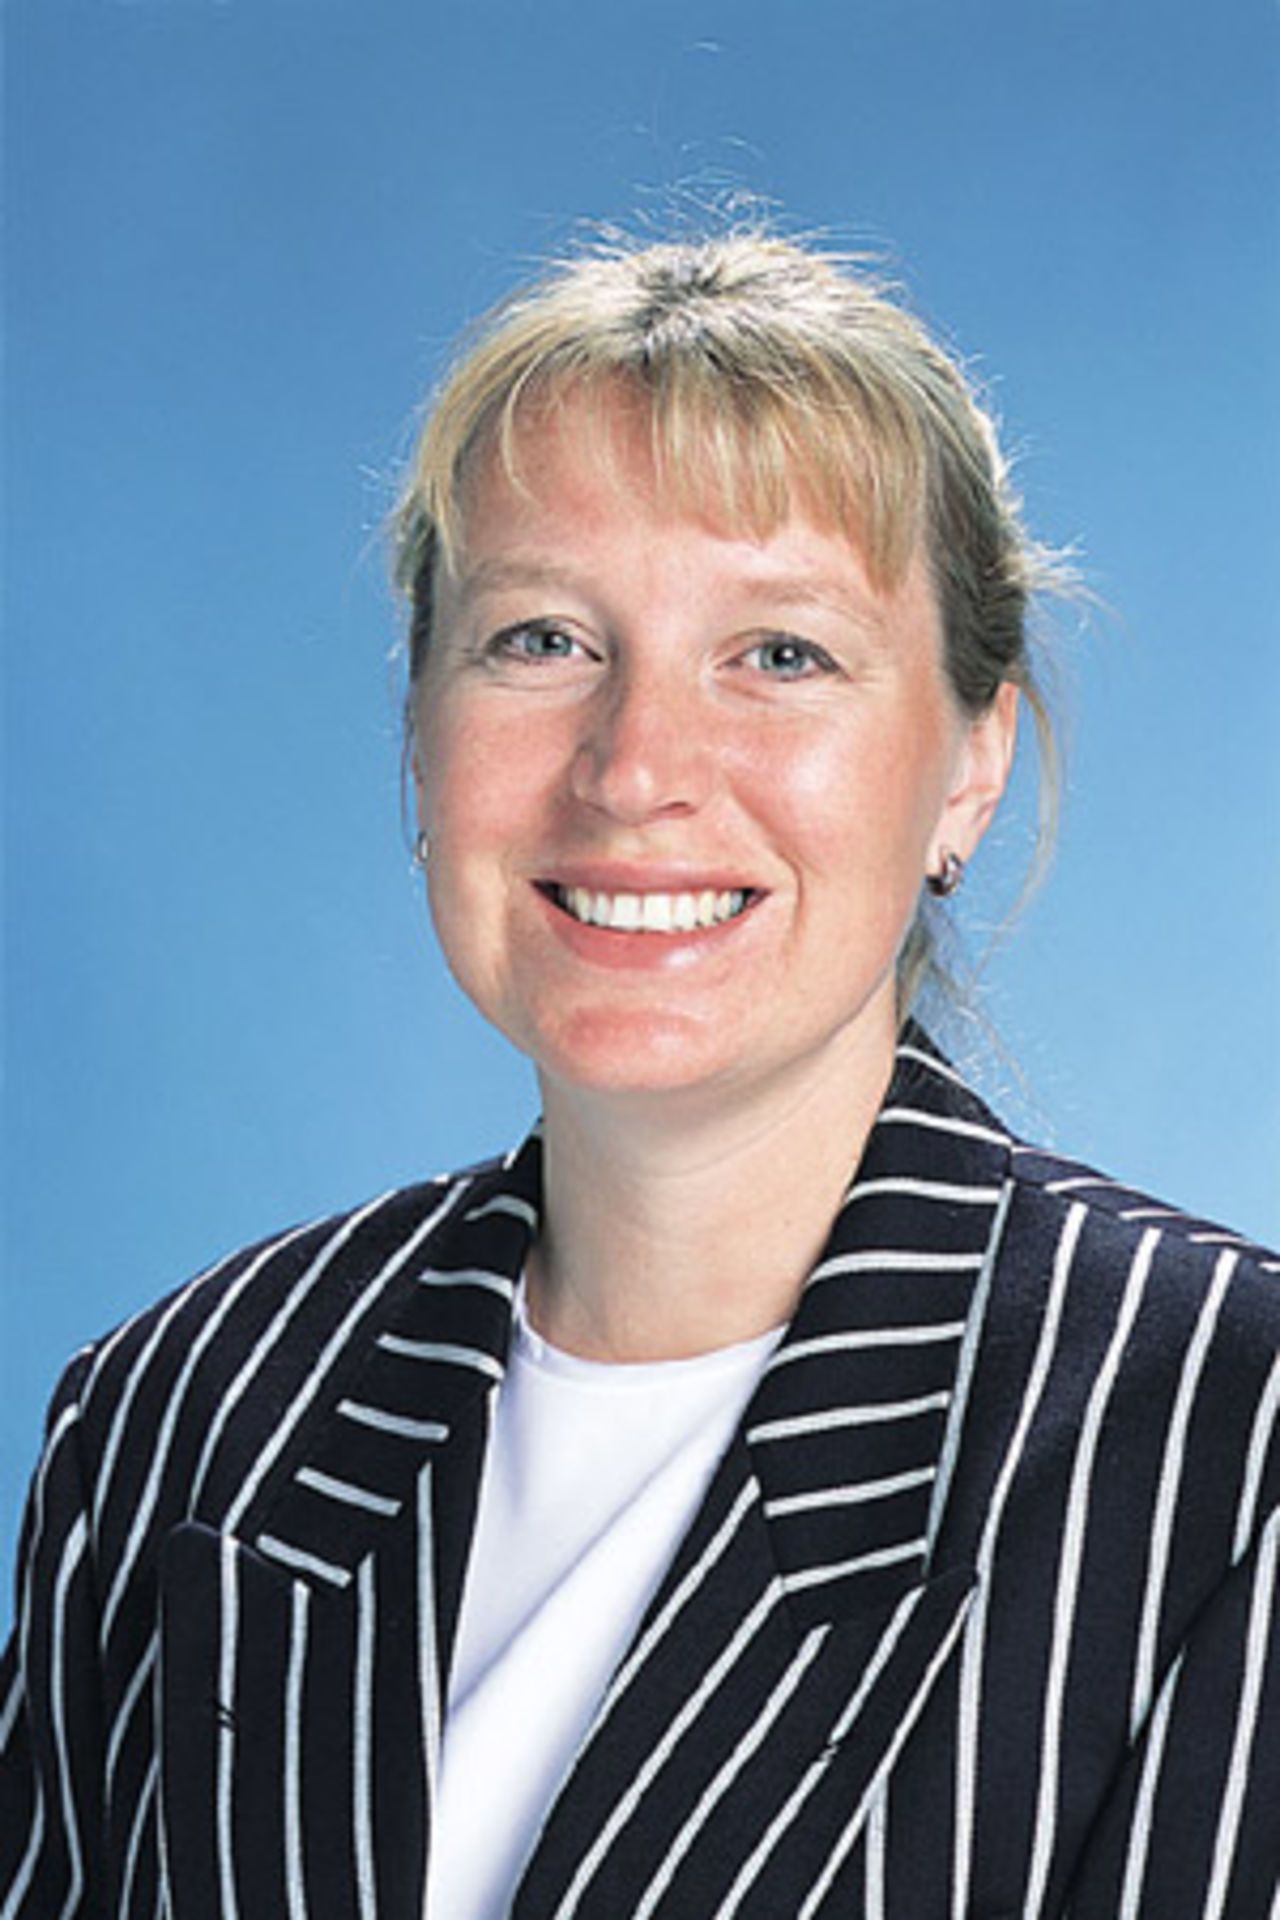 Portrait of Nicola Payne - New Zealand women's player in the 2001/02 season.